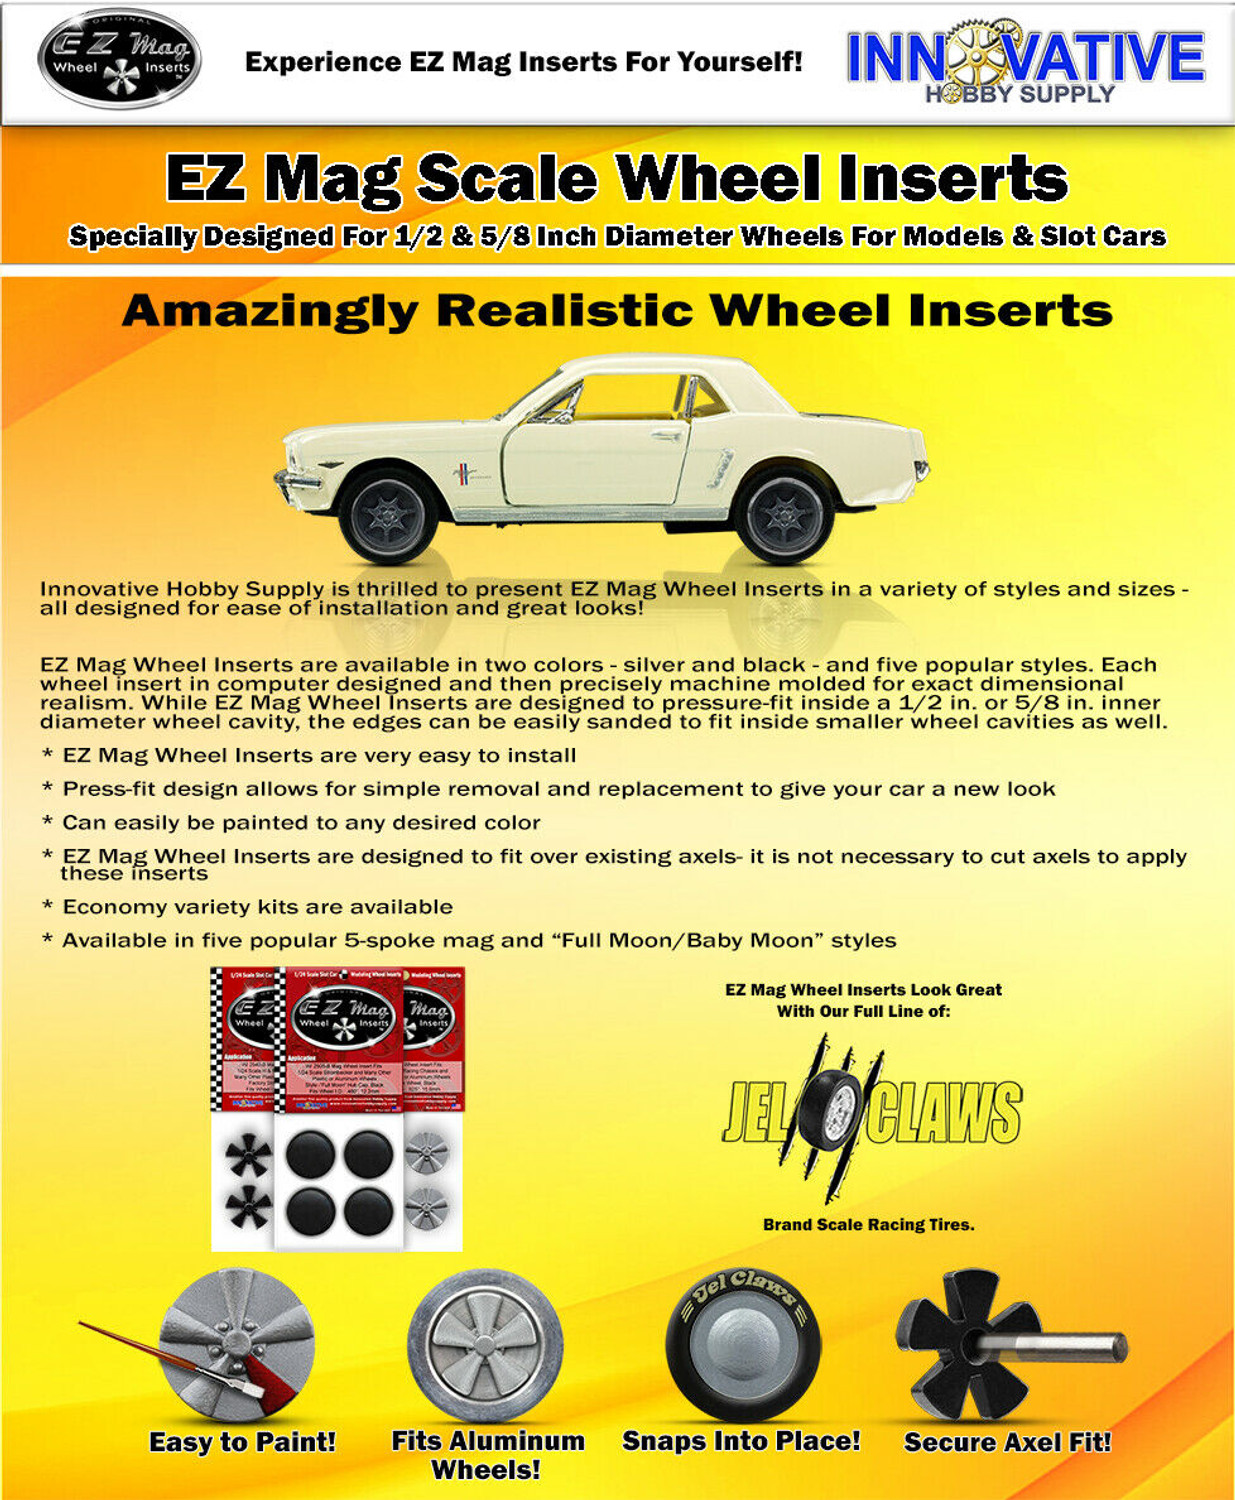 WI-2911-B Black Classic Five Spoke "Keystone" Style EZ Mag Wheel Inserts